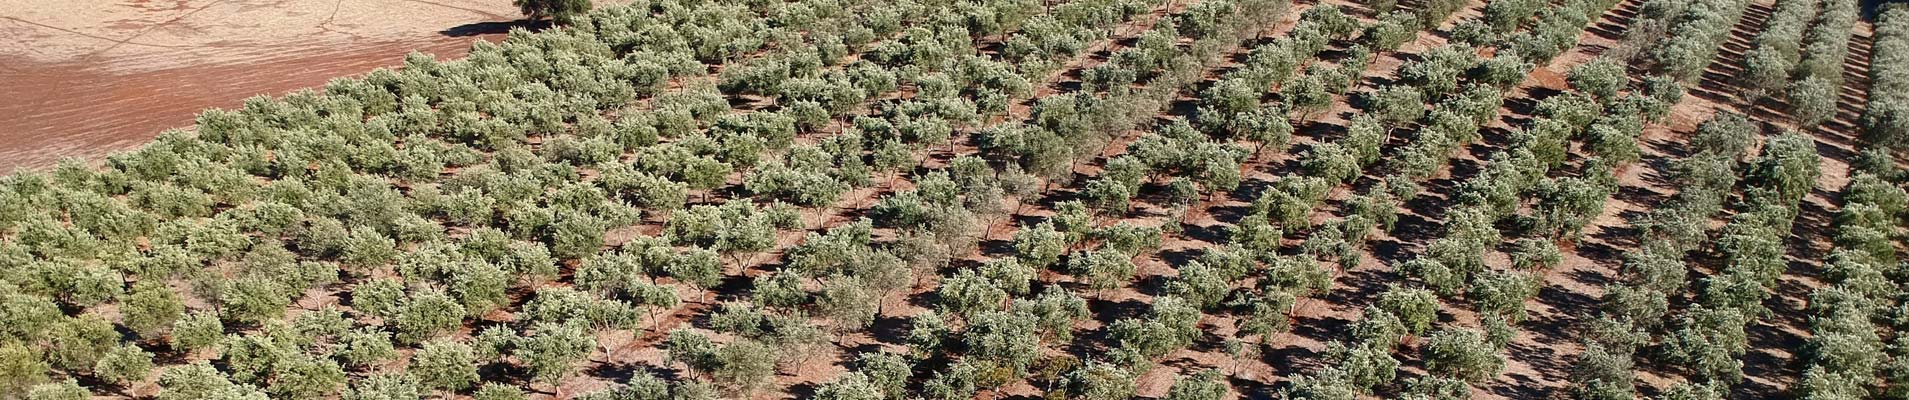 olive grove adelaide